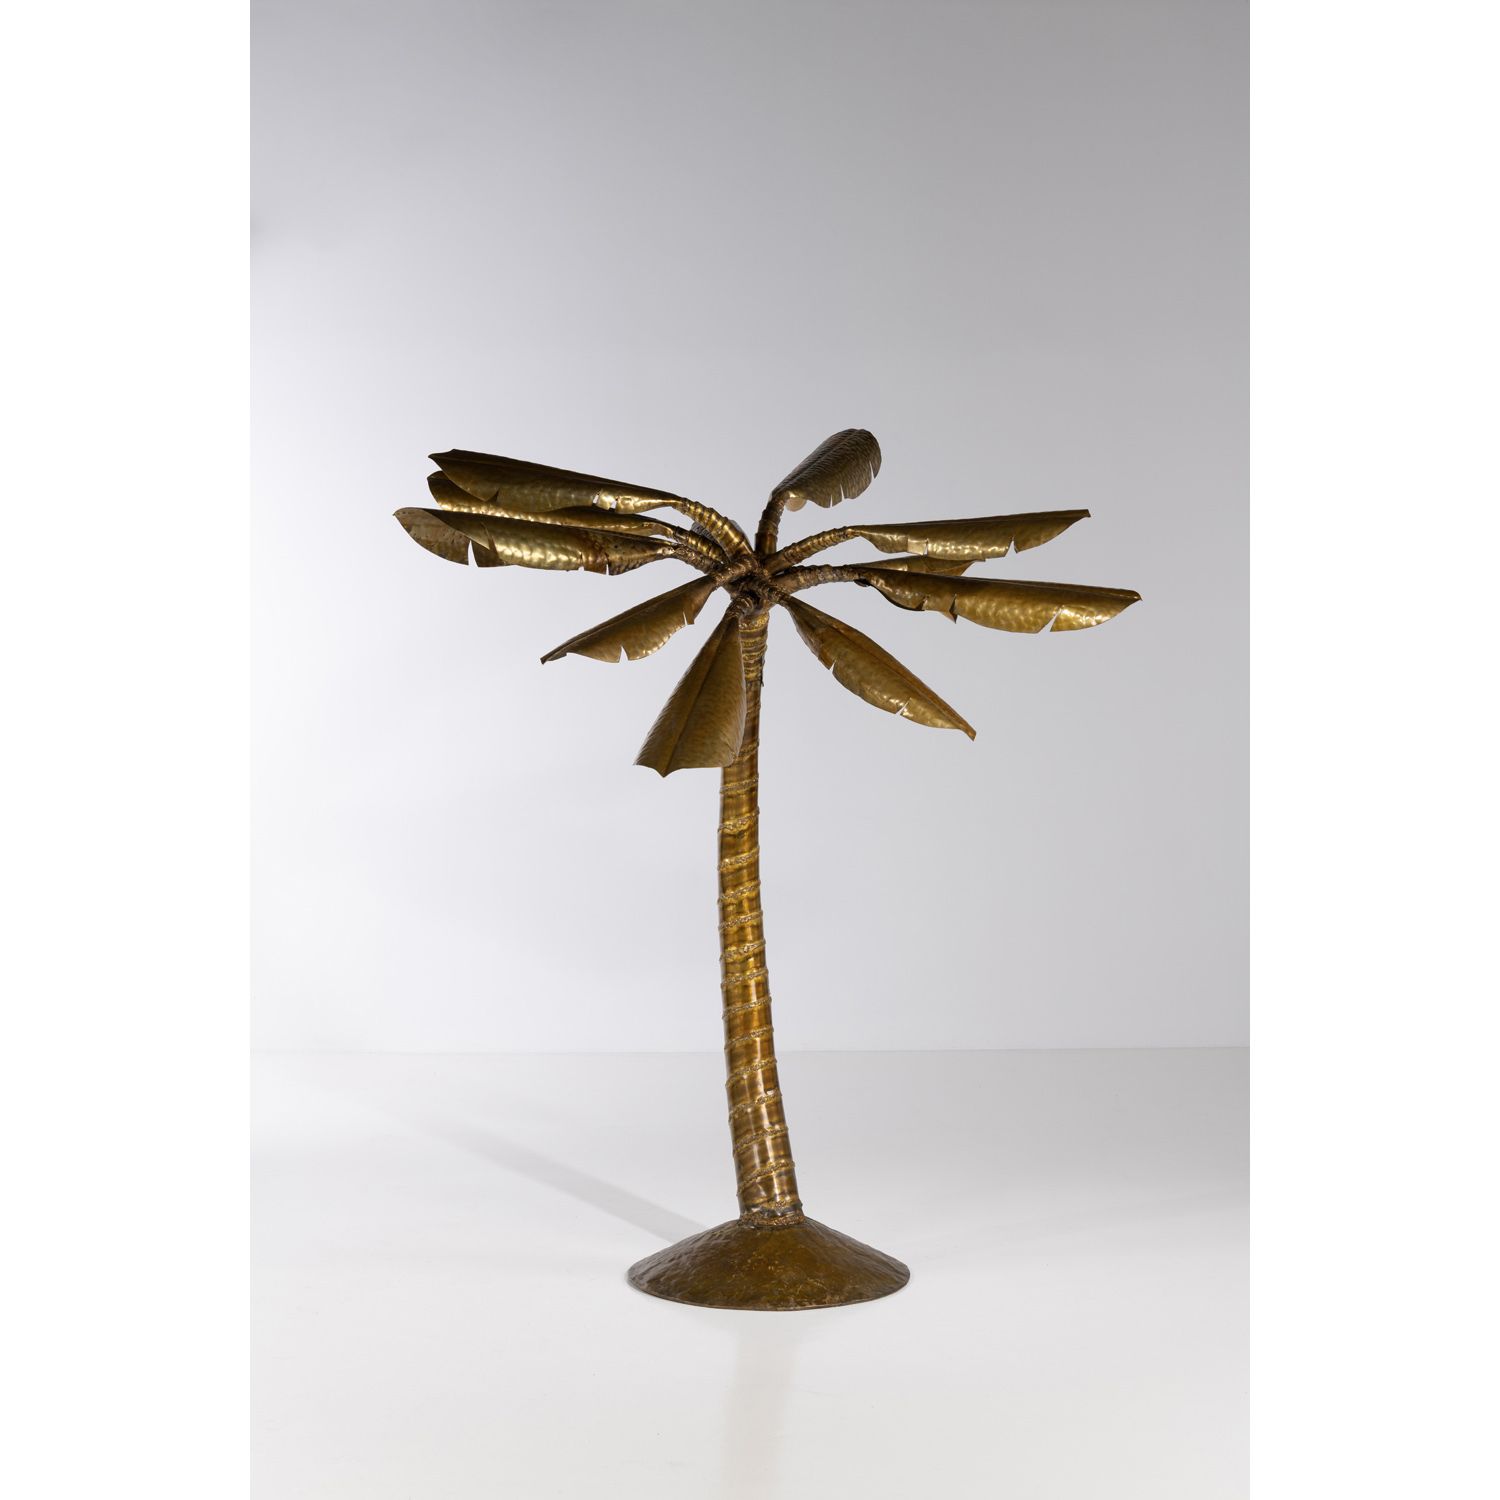 Null 法国作品（第20届）

落地灯

黄铜

创建于1970年代的模型

高220 × 直径185厘米